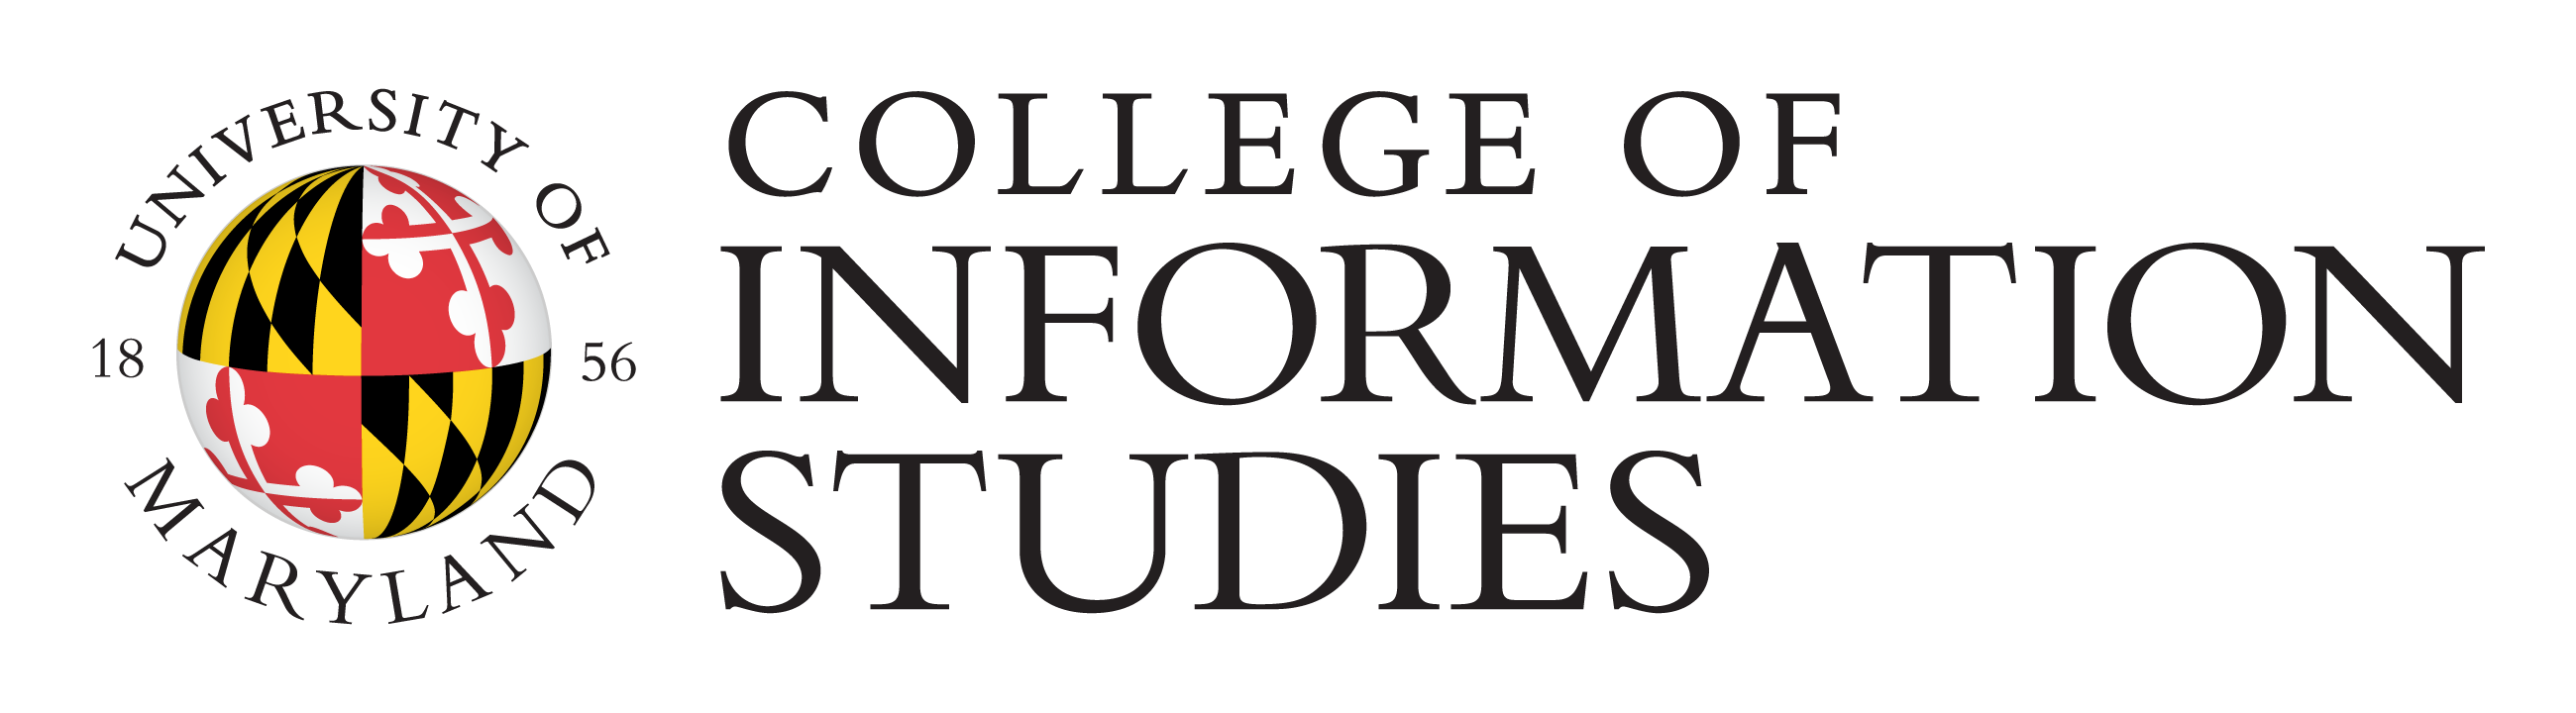 U M D College of Information Studies Logo